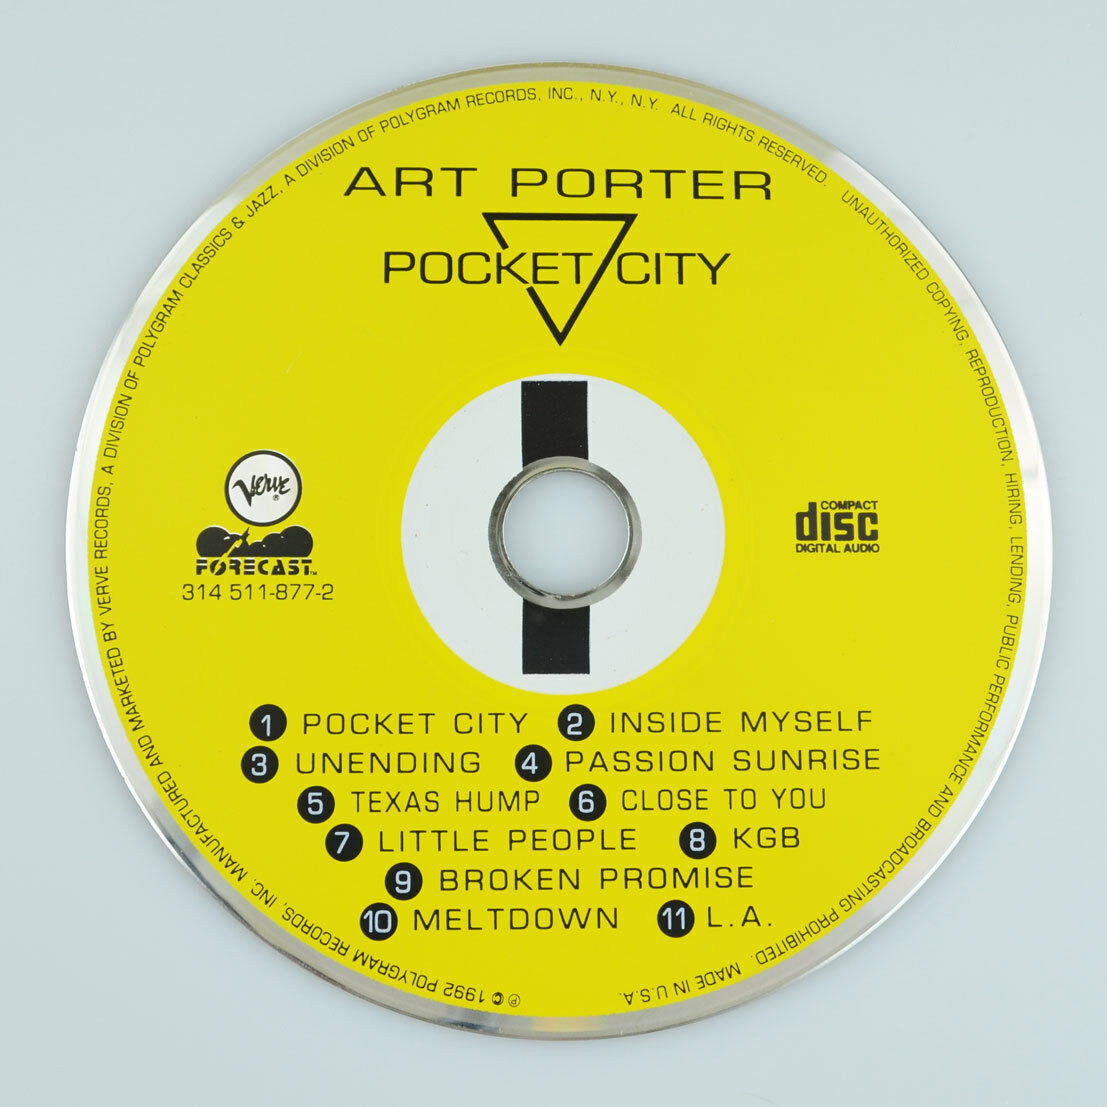 Pocket City by Art Porter (CD, May-1992, Verve) DISC ONLY